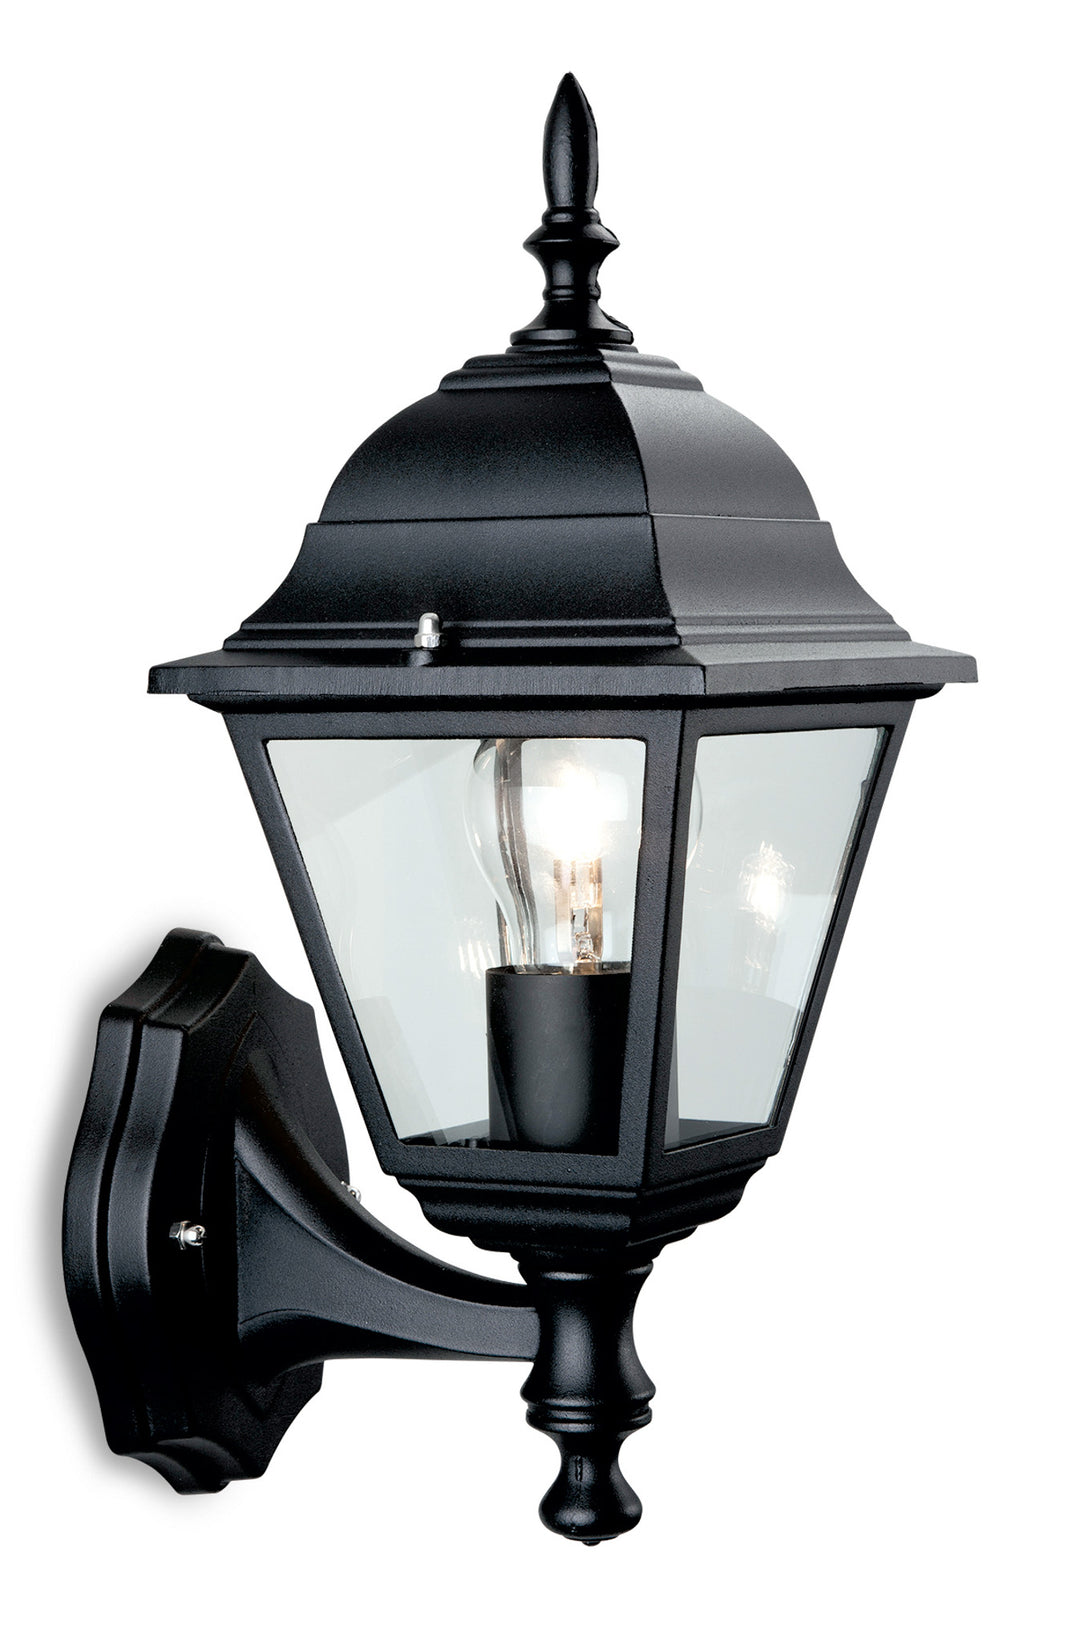 4 Panel Lantern - Uplight Black